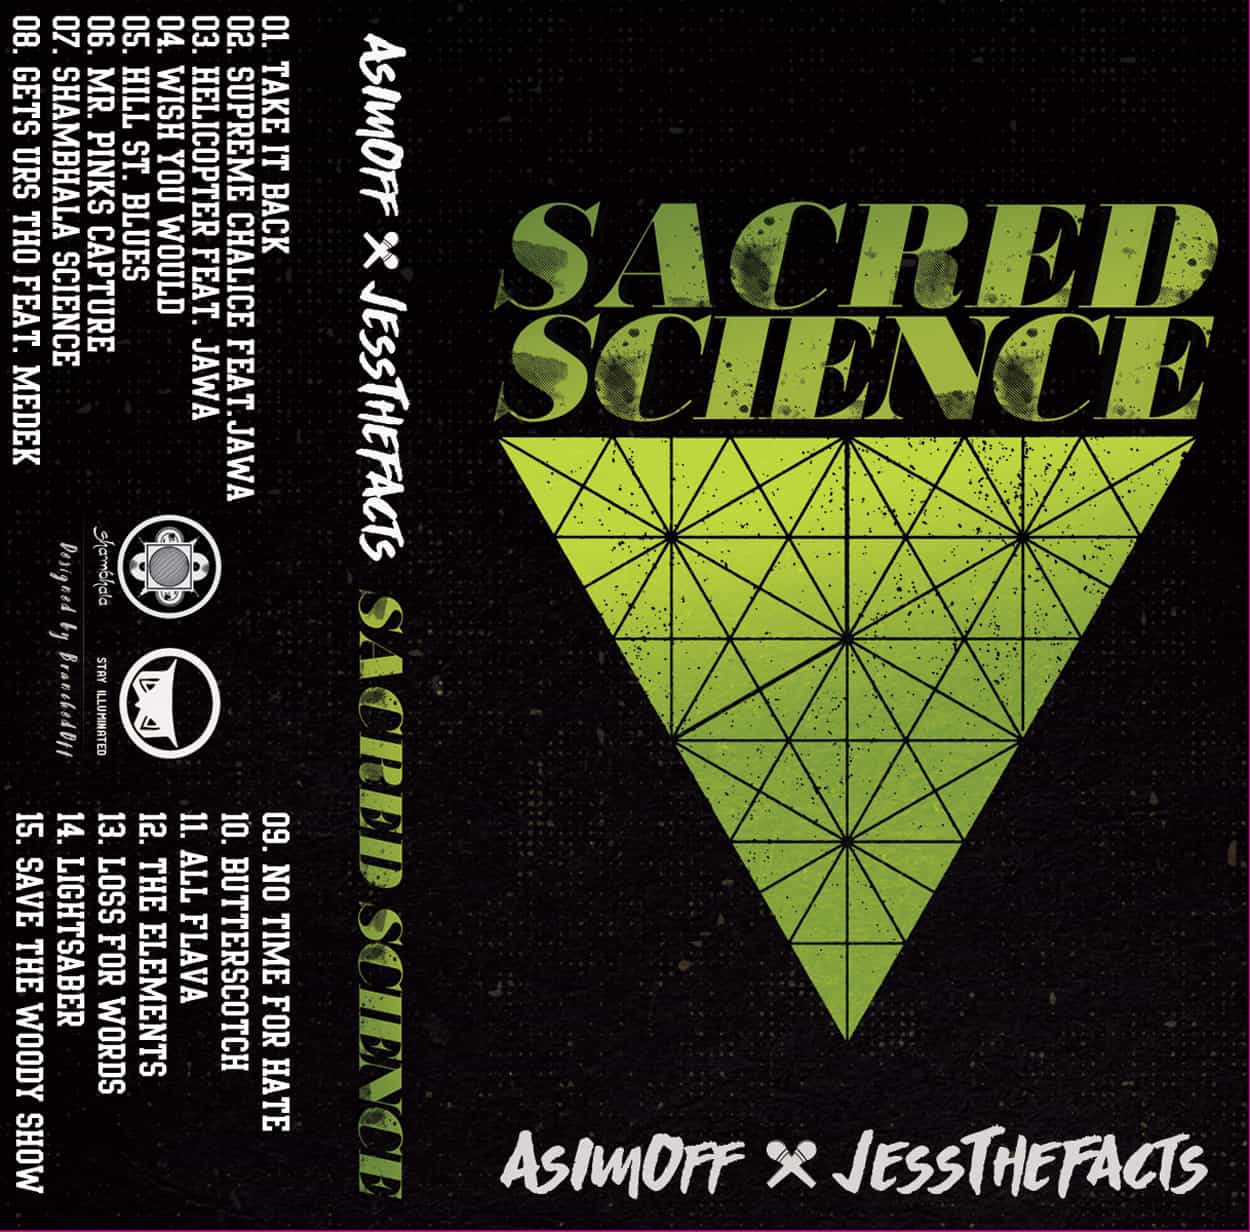 sacred science - cassette tape design